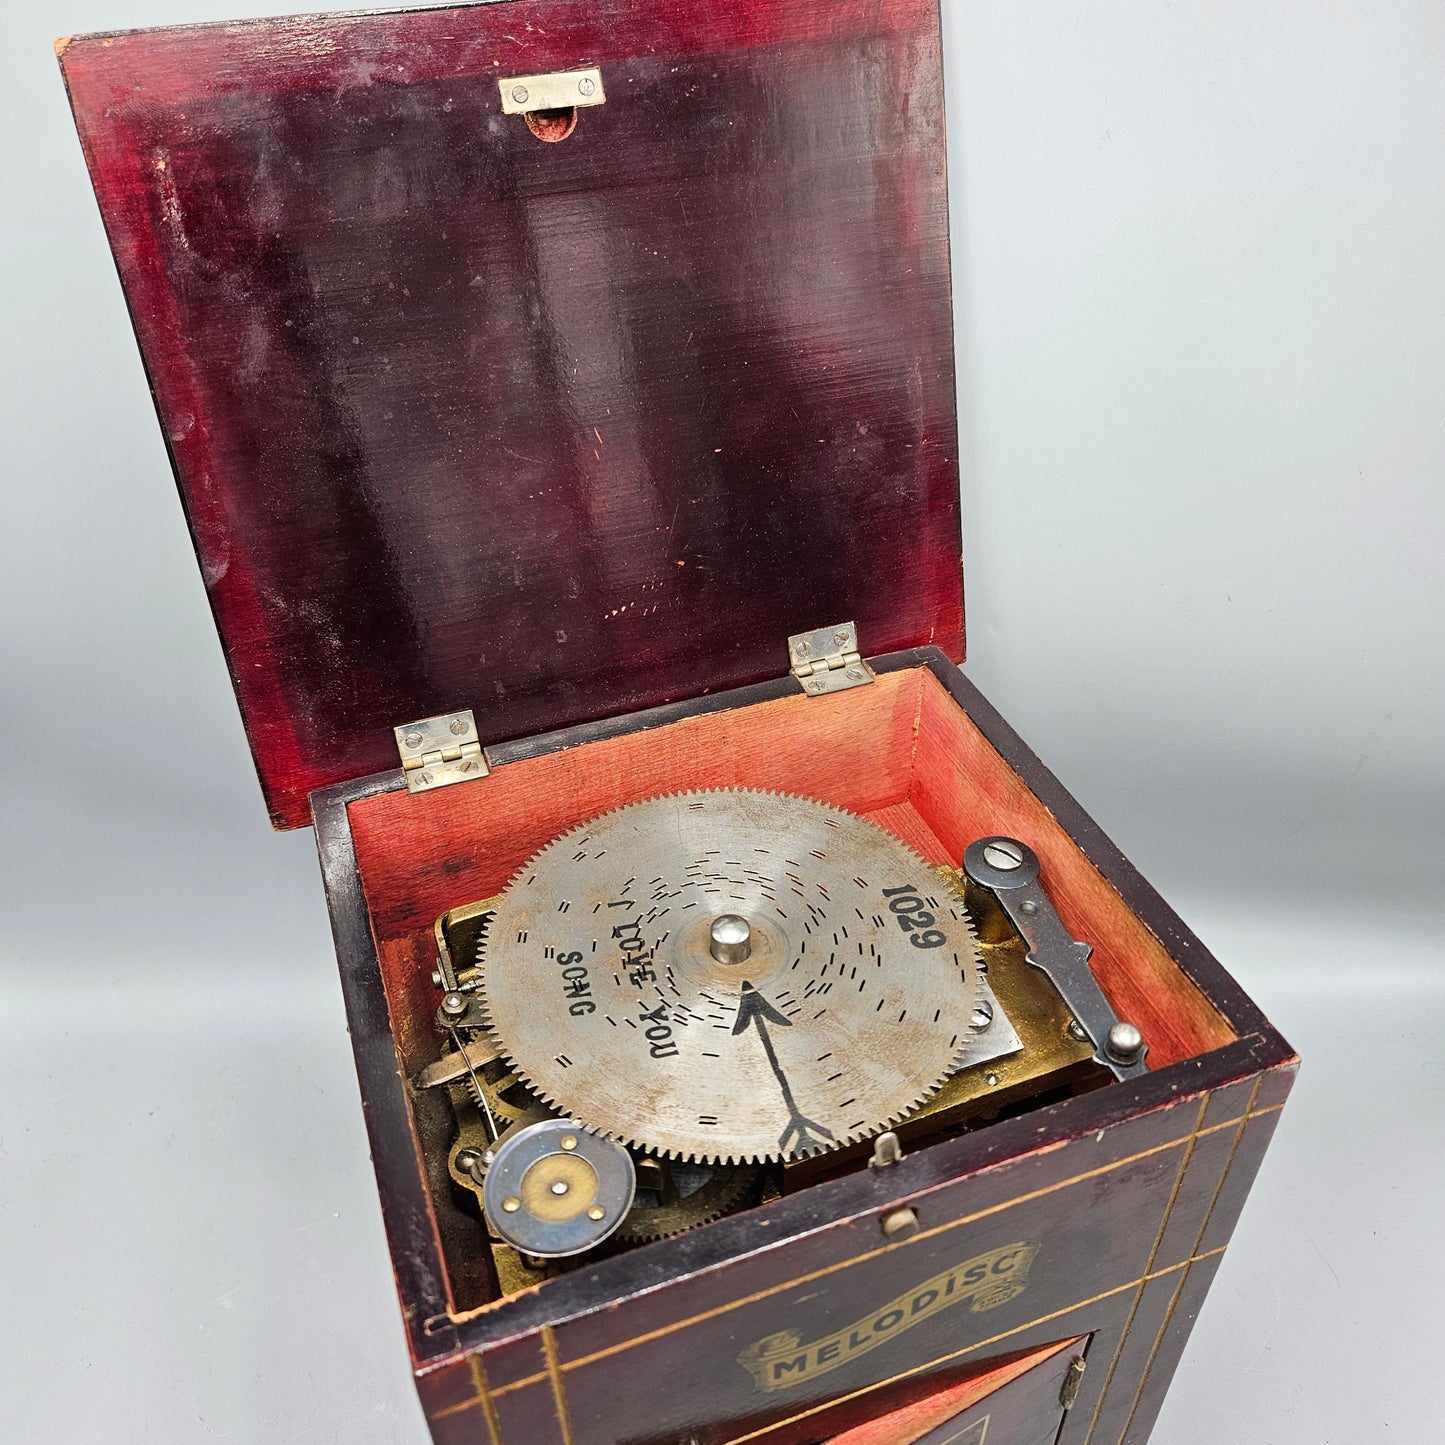 Vintage Melodisc Swiss Mechanical Wind Up Music Box